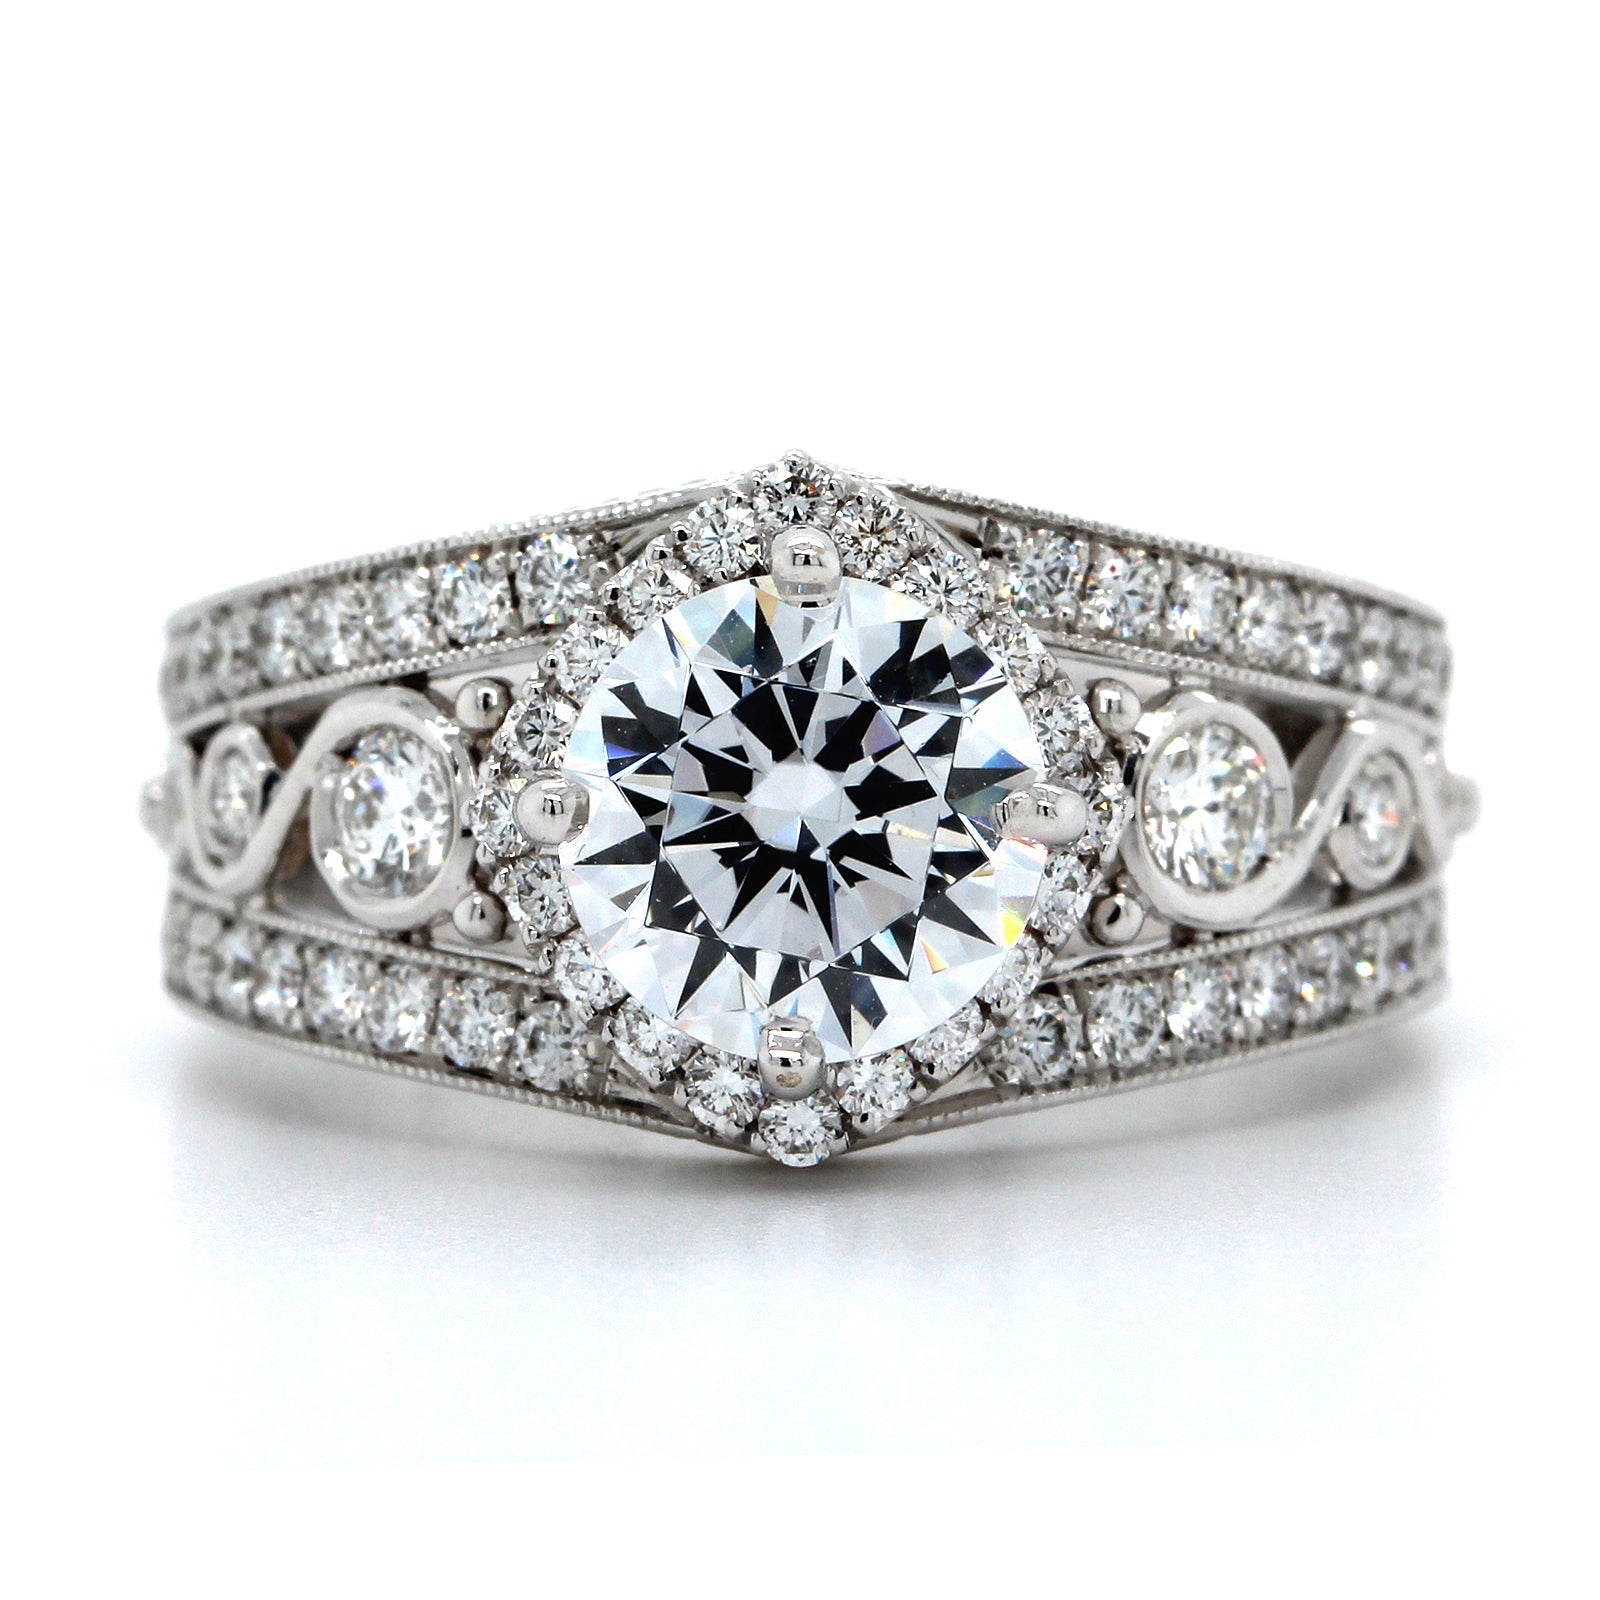 18K White Gold Twist Center 3 Row Diamond Engagement Ring Setting, 18k white gold, Long's Jewelers